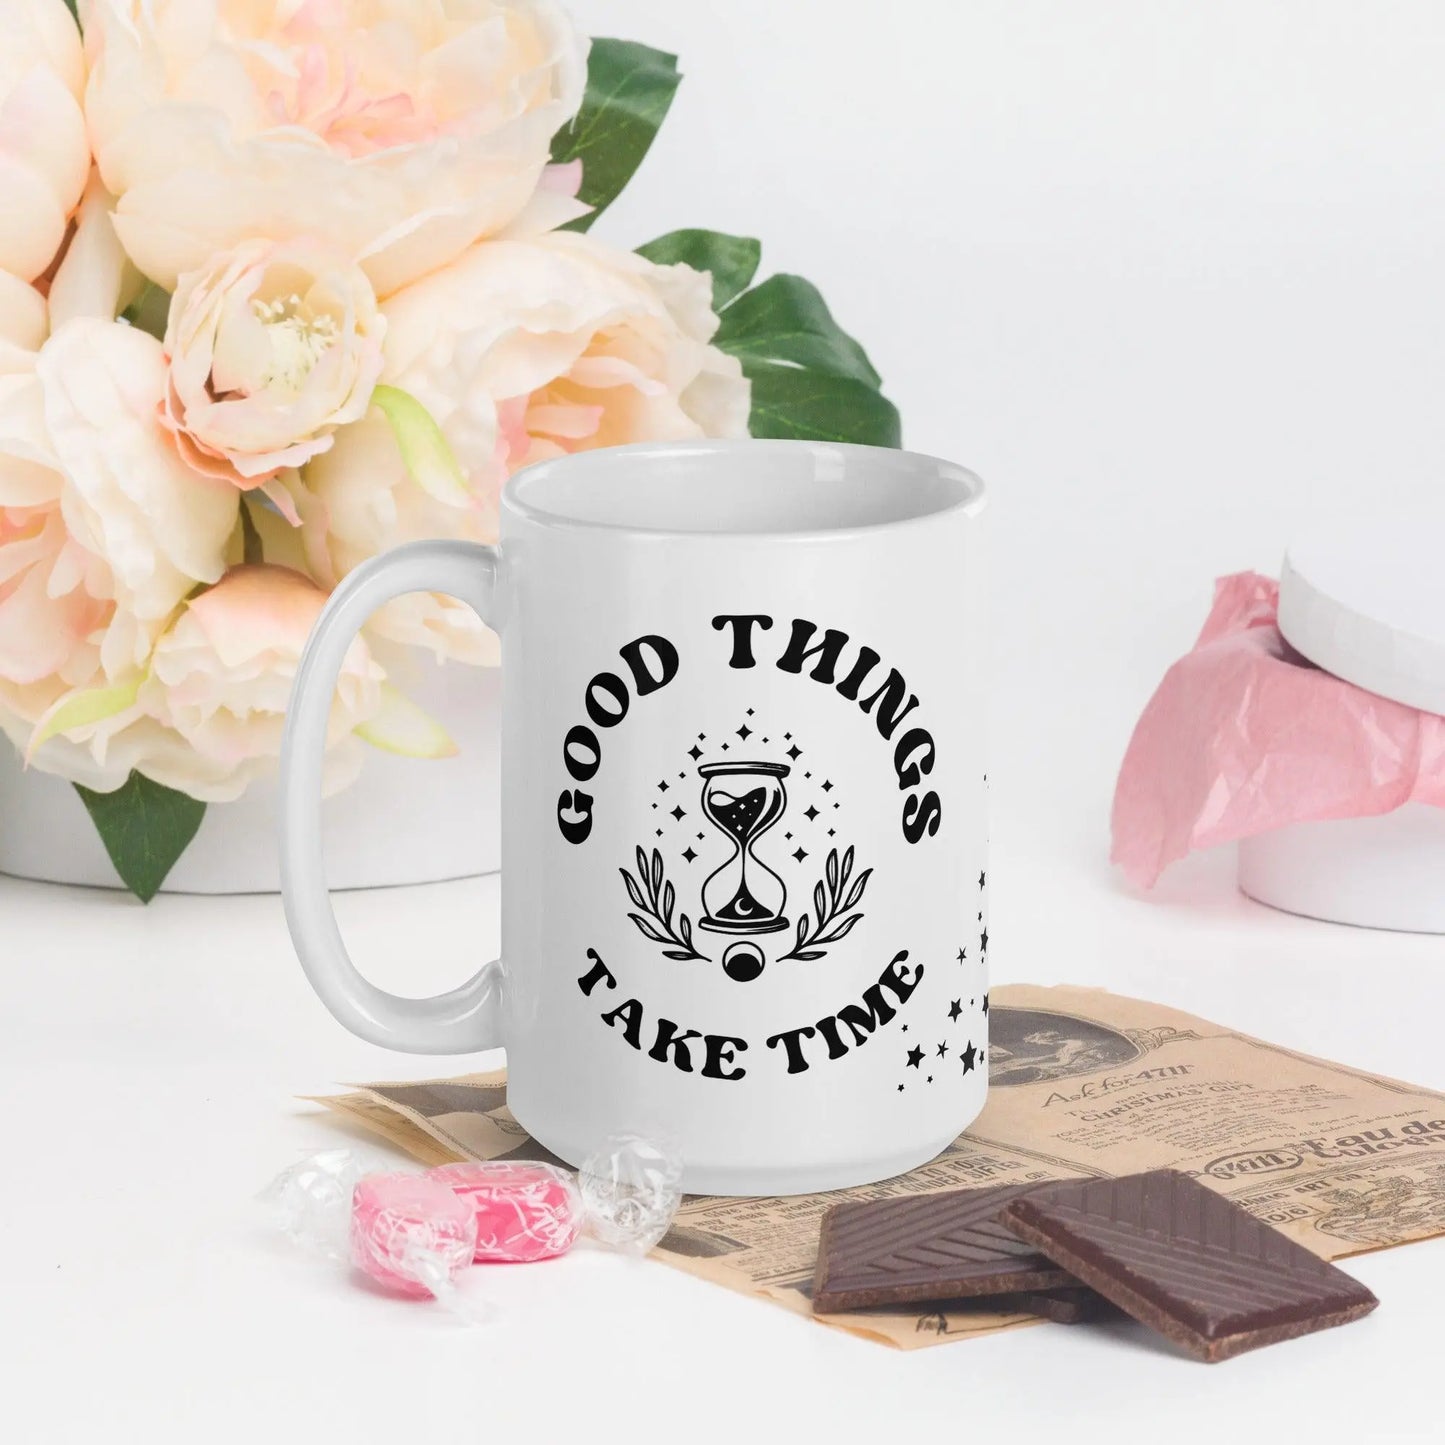 "Good Things Take Time" White Glossy Mug | Inspirational Gift - NikoBeadsUA